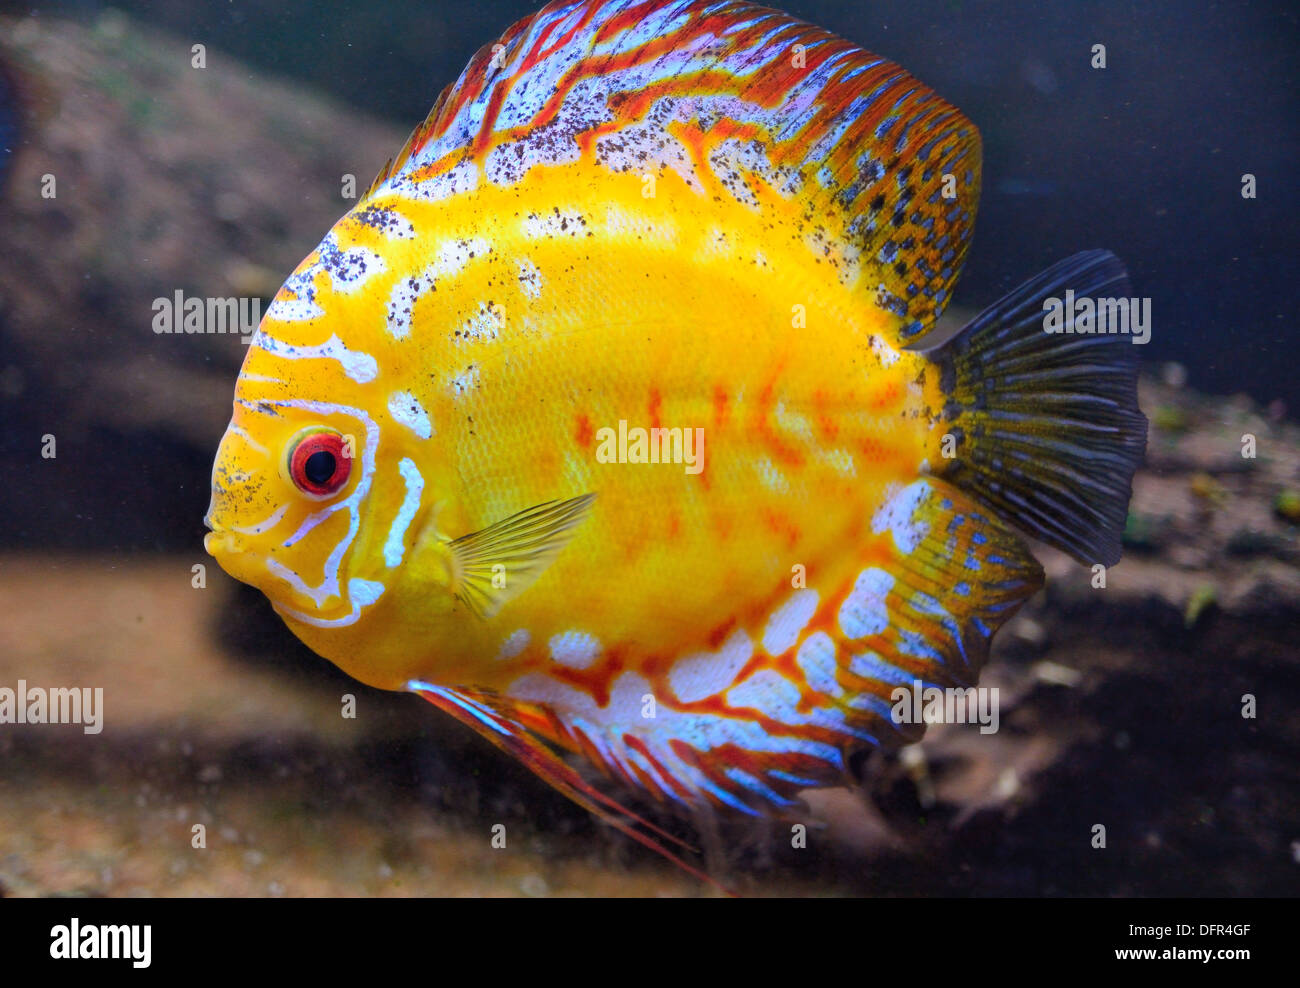 Yellow fish in the deep sea aquarium. Stock Photo